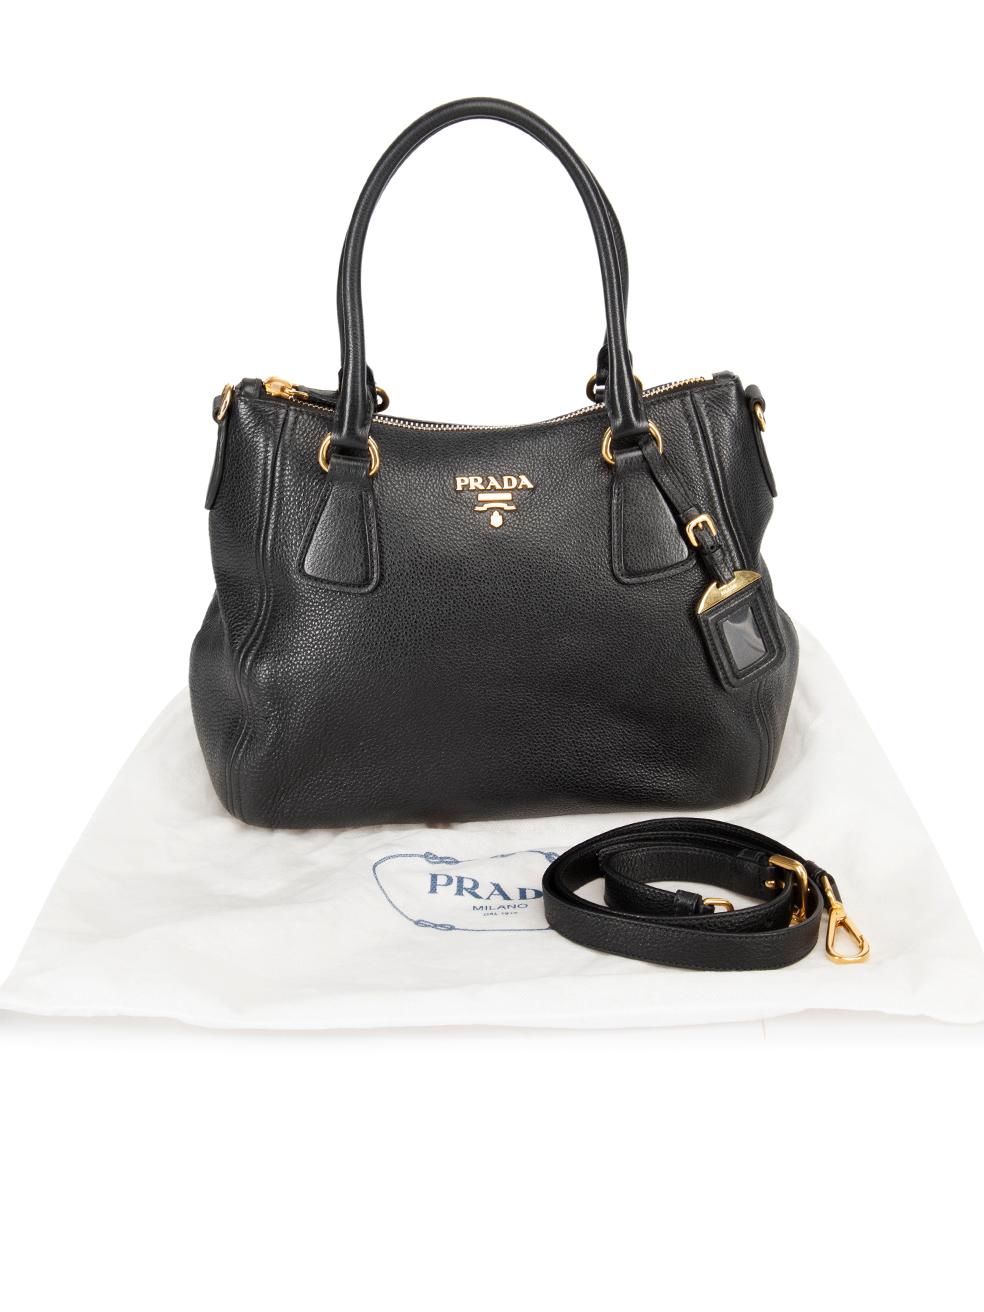 Prada Women's Black Leather Vitello Daino Convertible Handbag 4